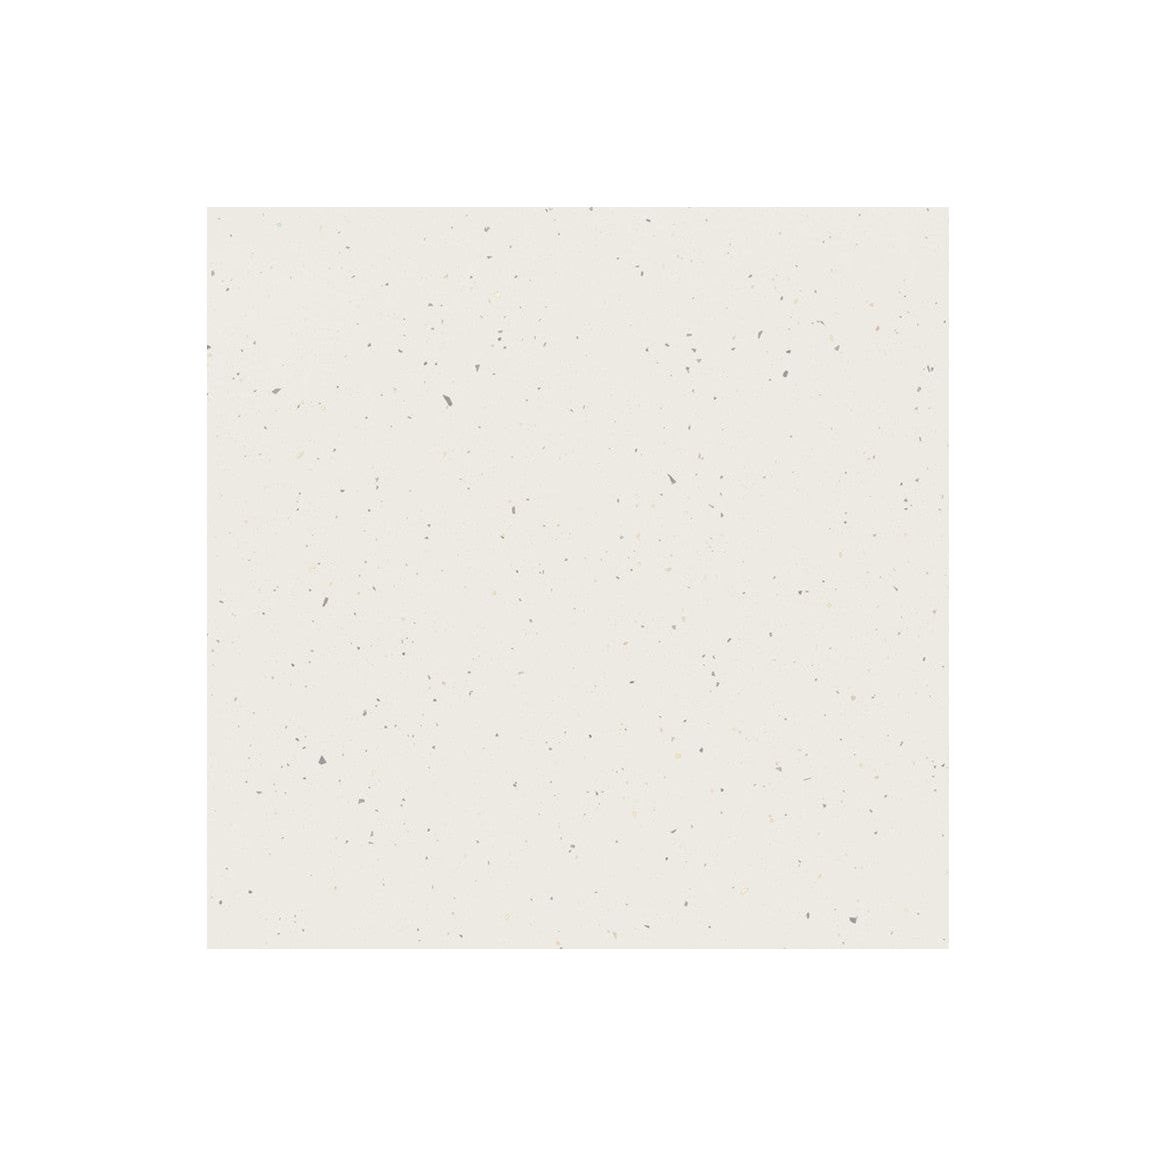 Birchmount 1500x330x22mm Laminate Worktop - White Sparkle Gloss